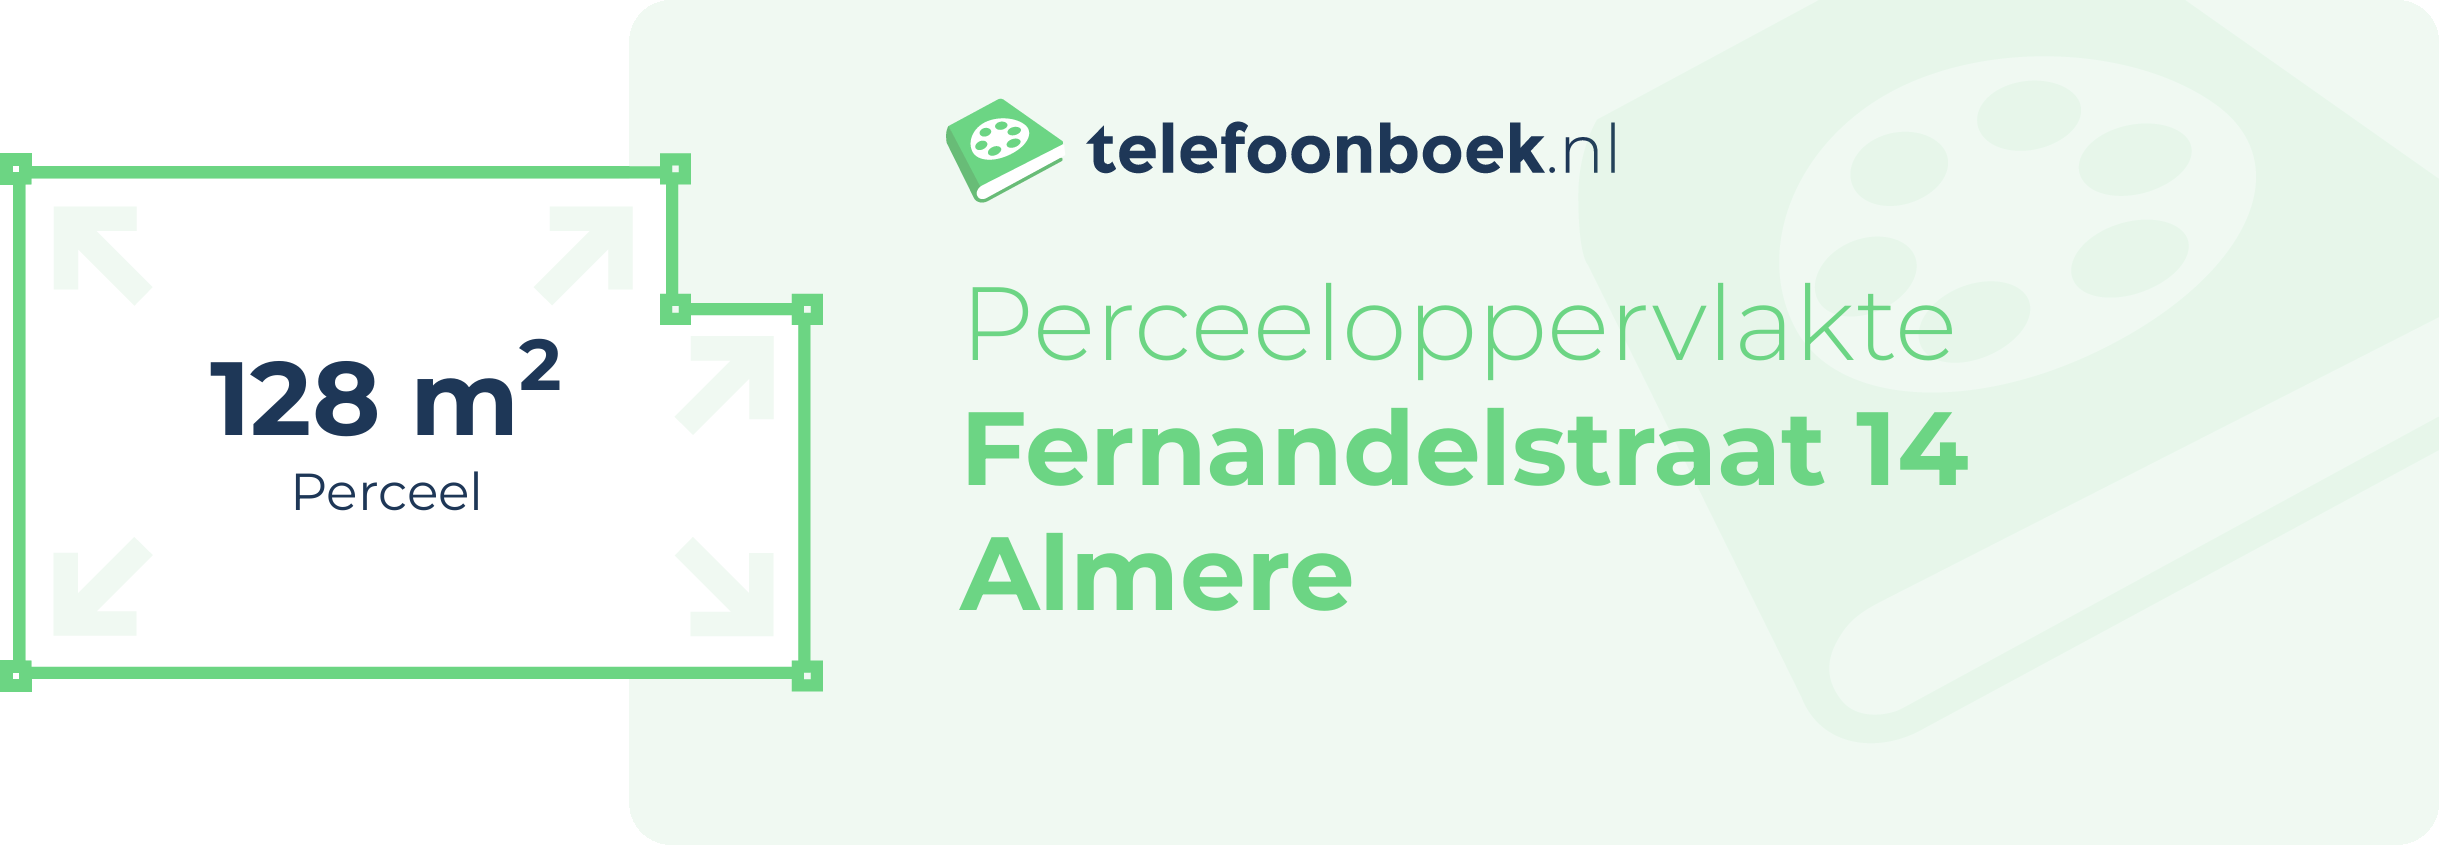 Perceeloppervlakte Fernandelstraat 14 Almere